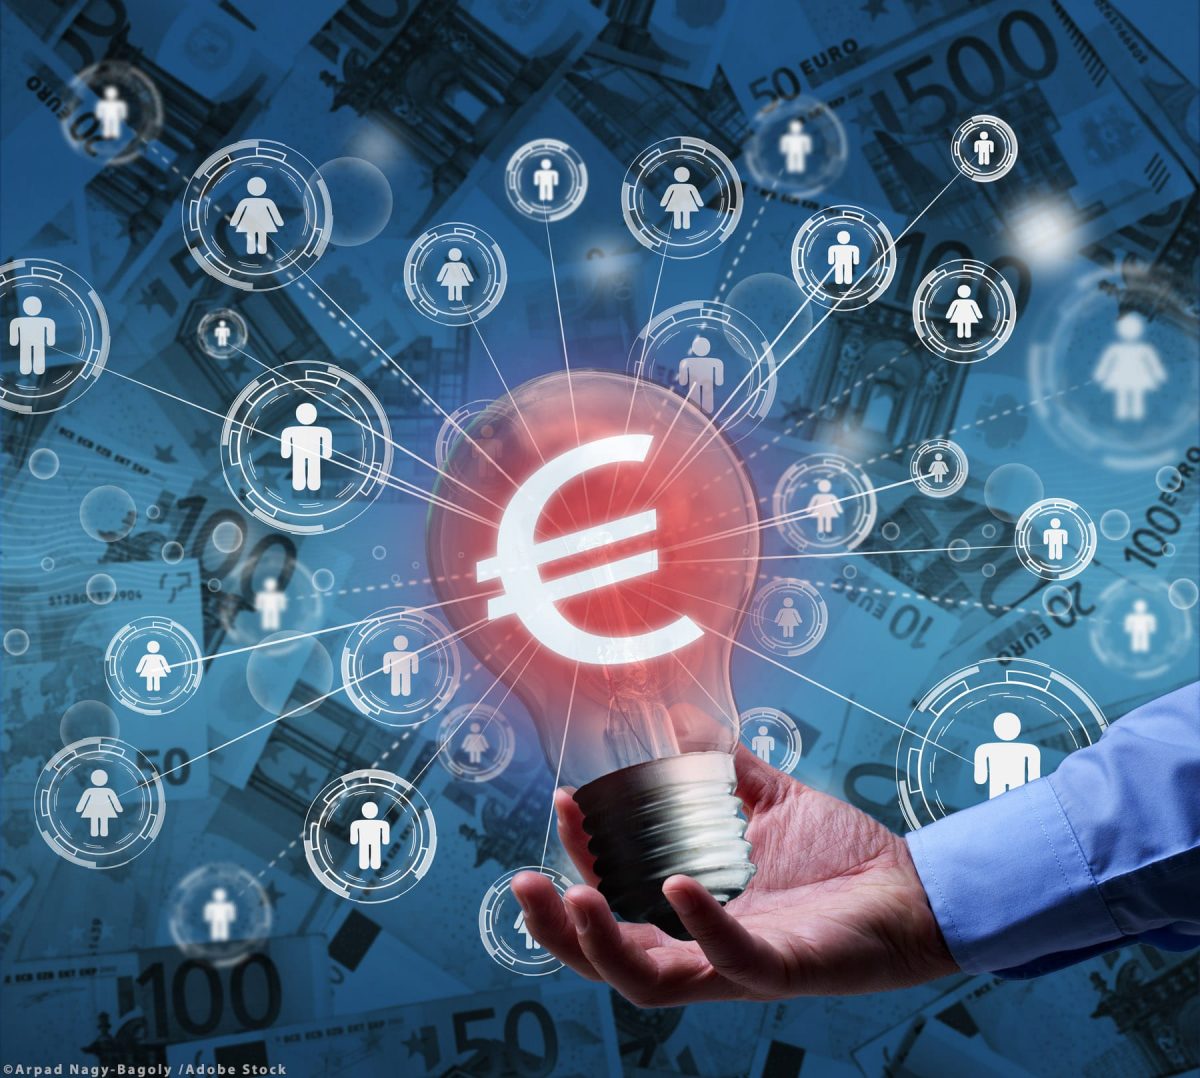 How new EU crowdfunding regulations impact crowdfunding platforms